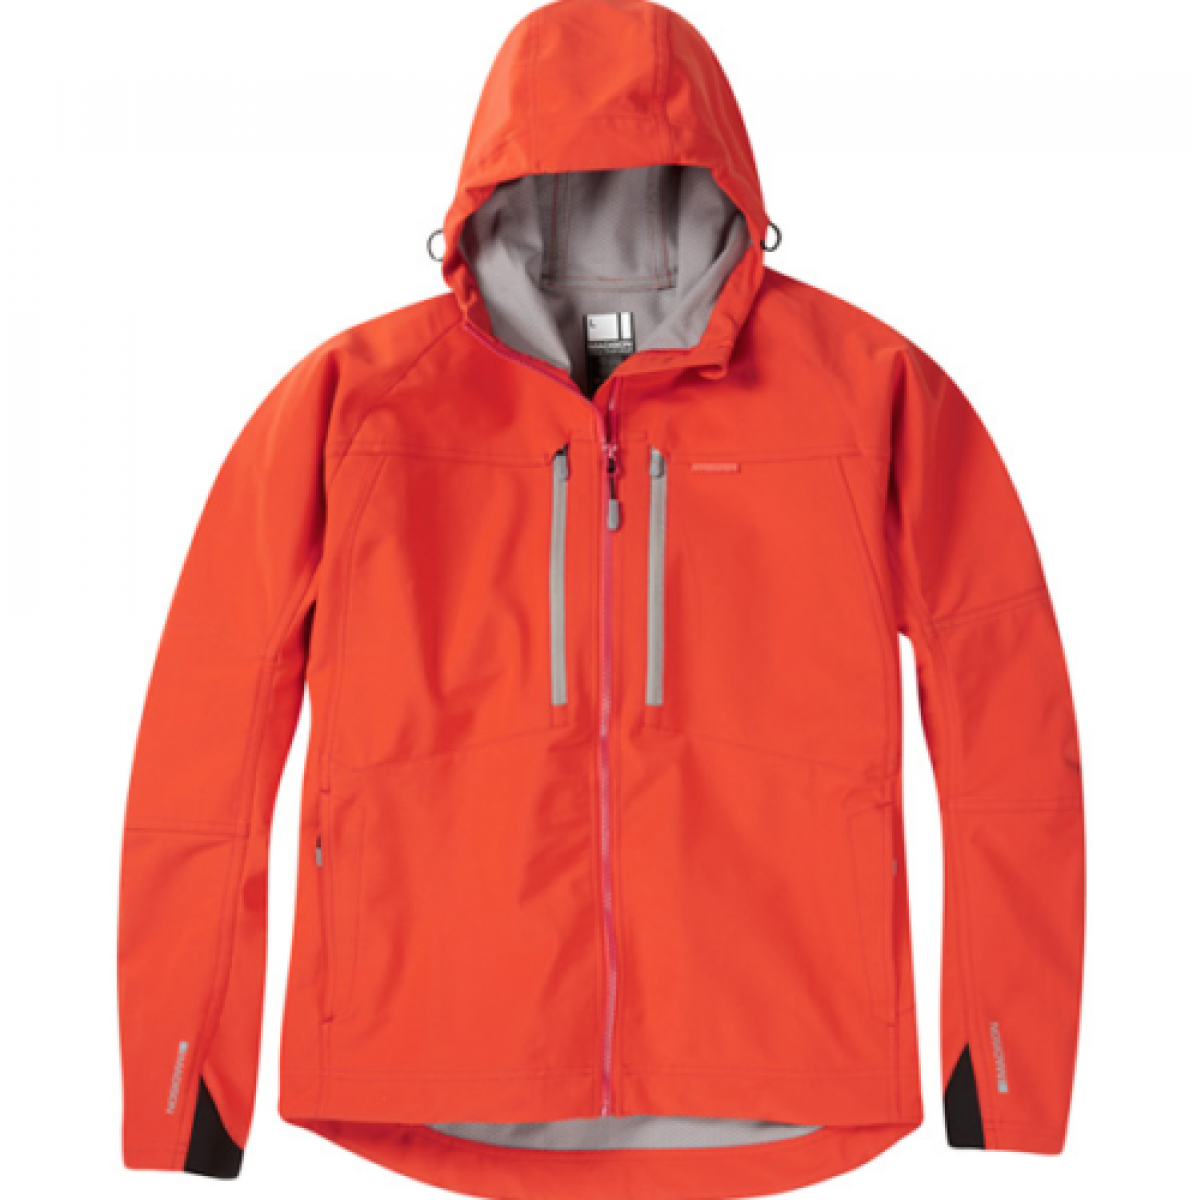 Madison Zenith Orange waterproof jacket - Medium